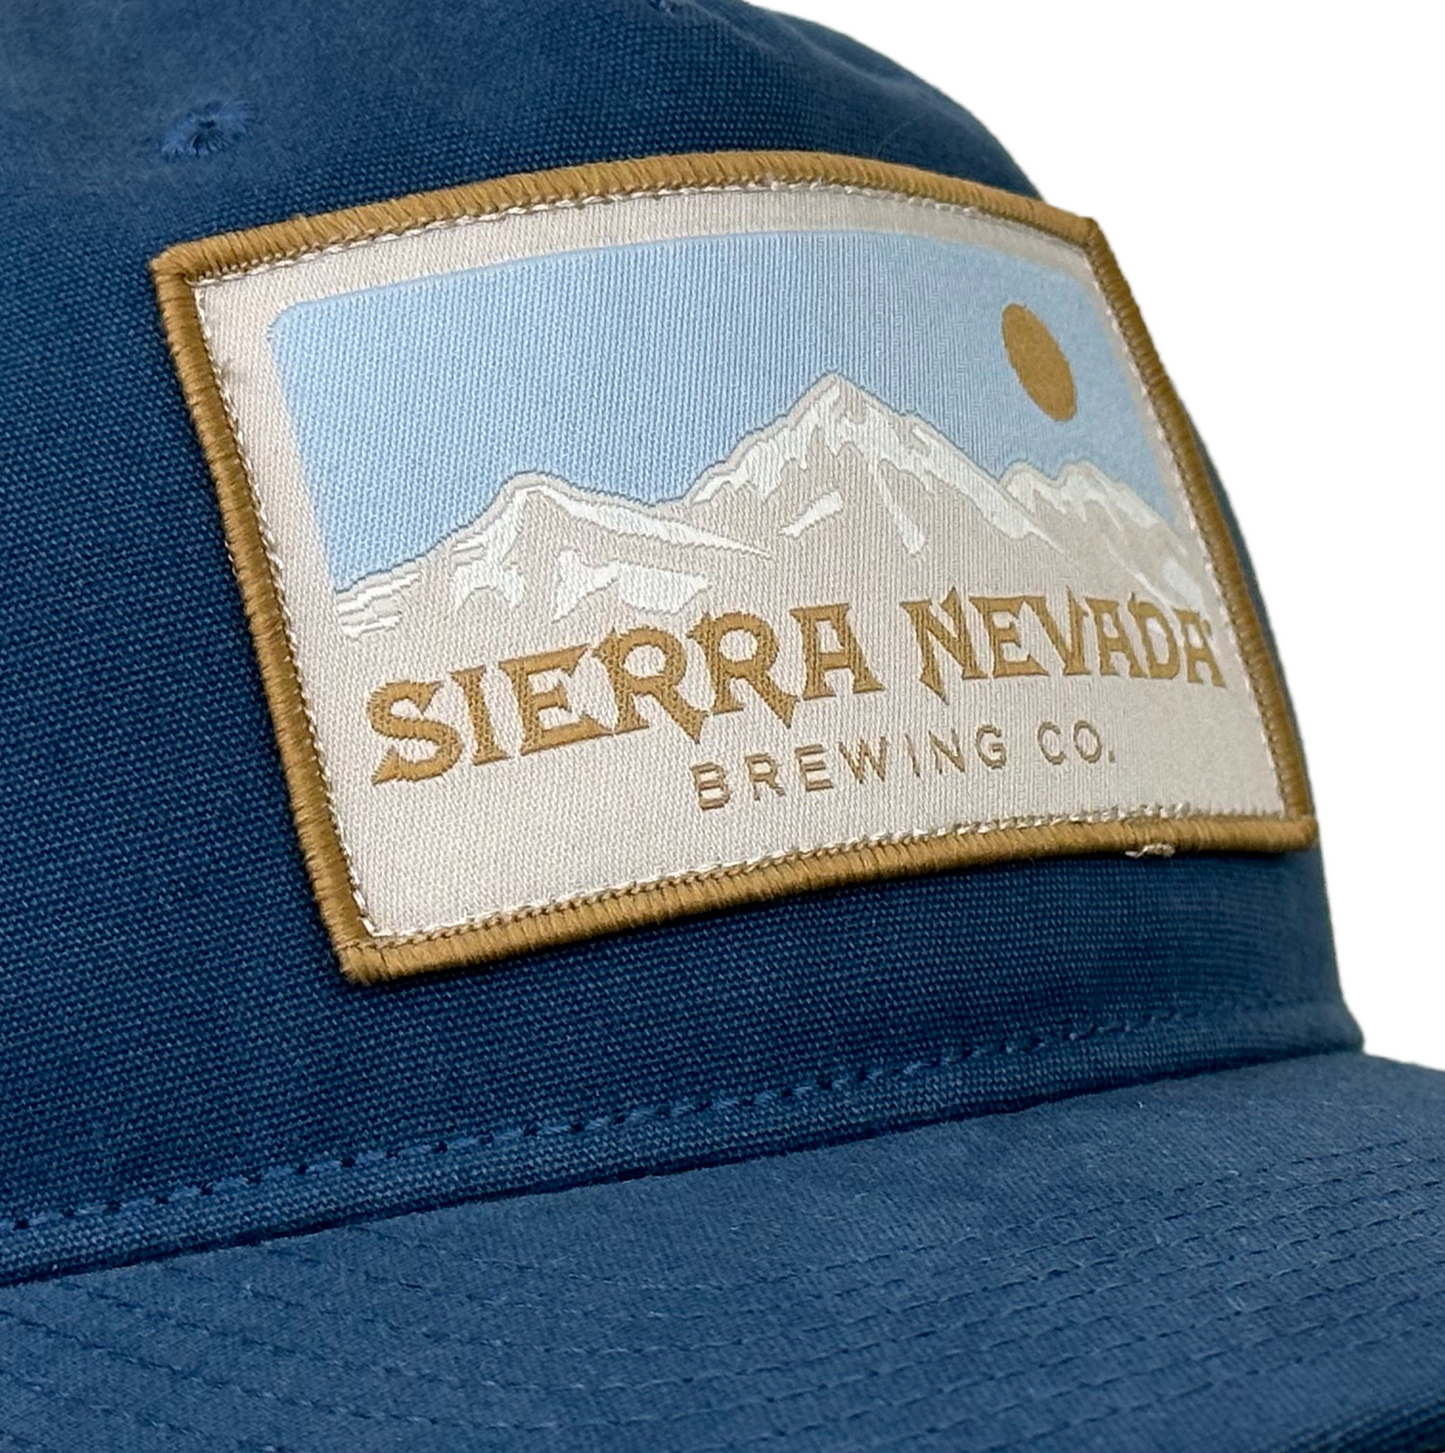 Sierra Nevada - Sierra Nevada Classic Golfer Hat Navy